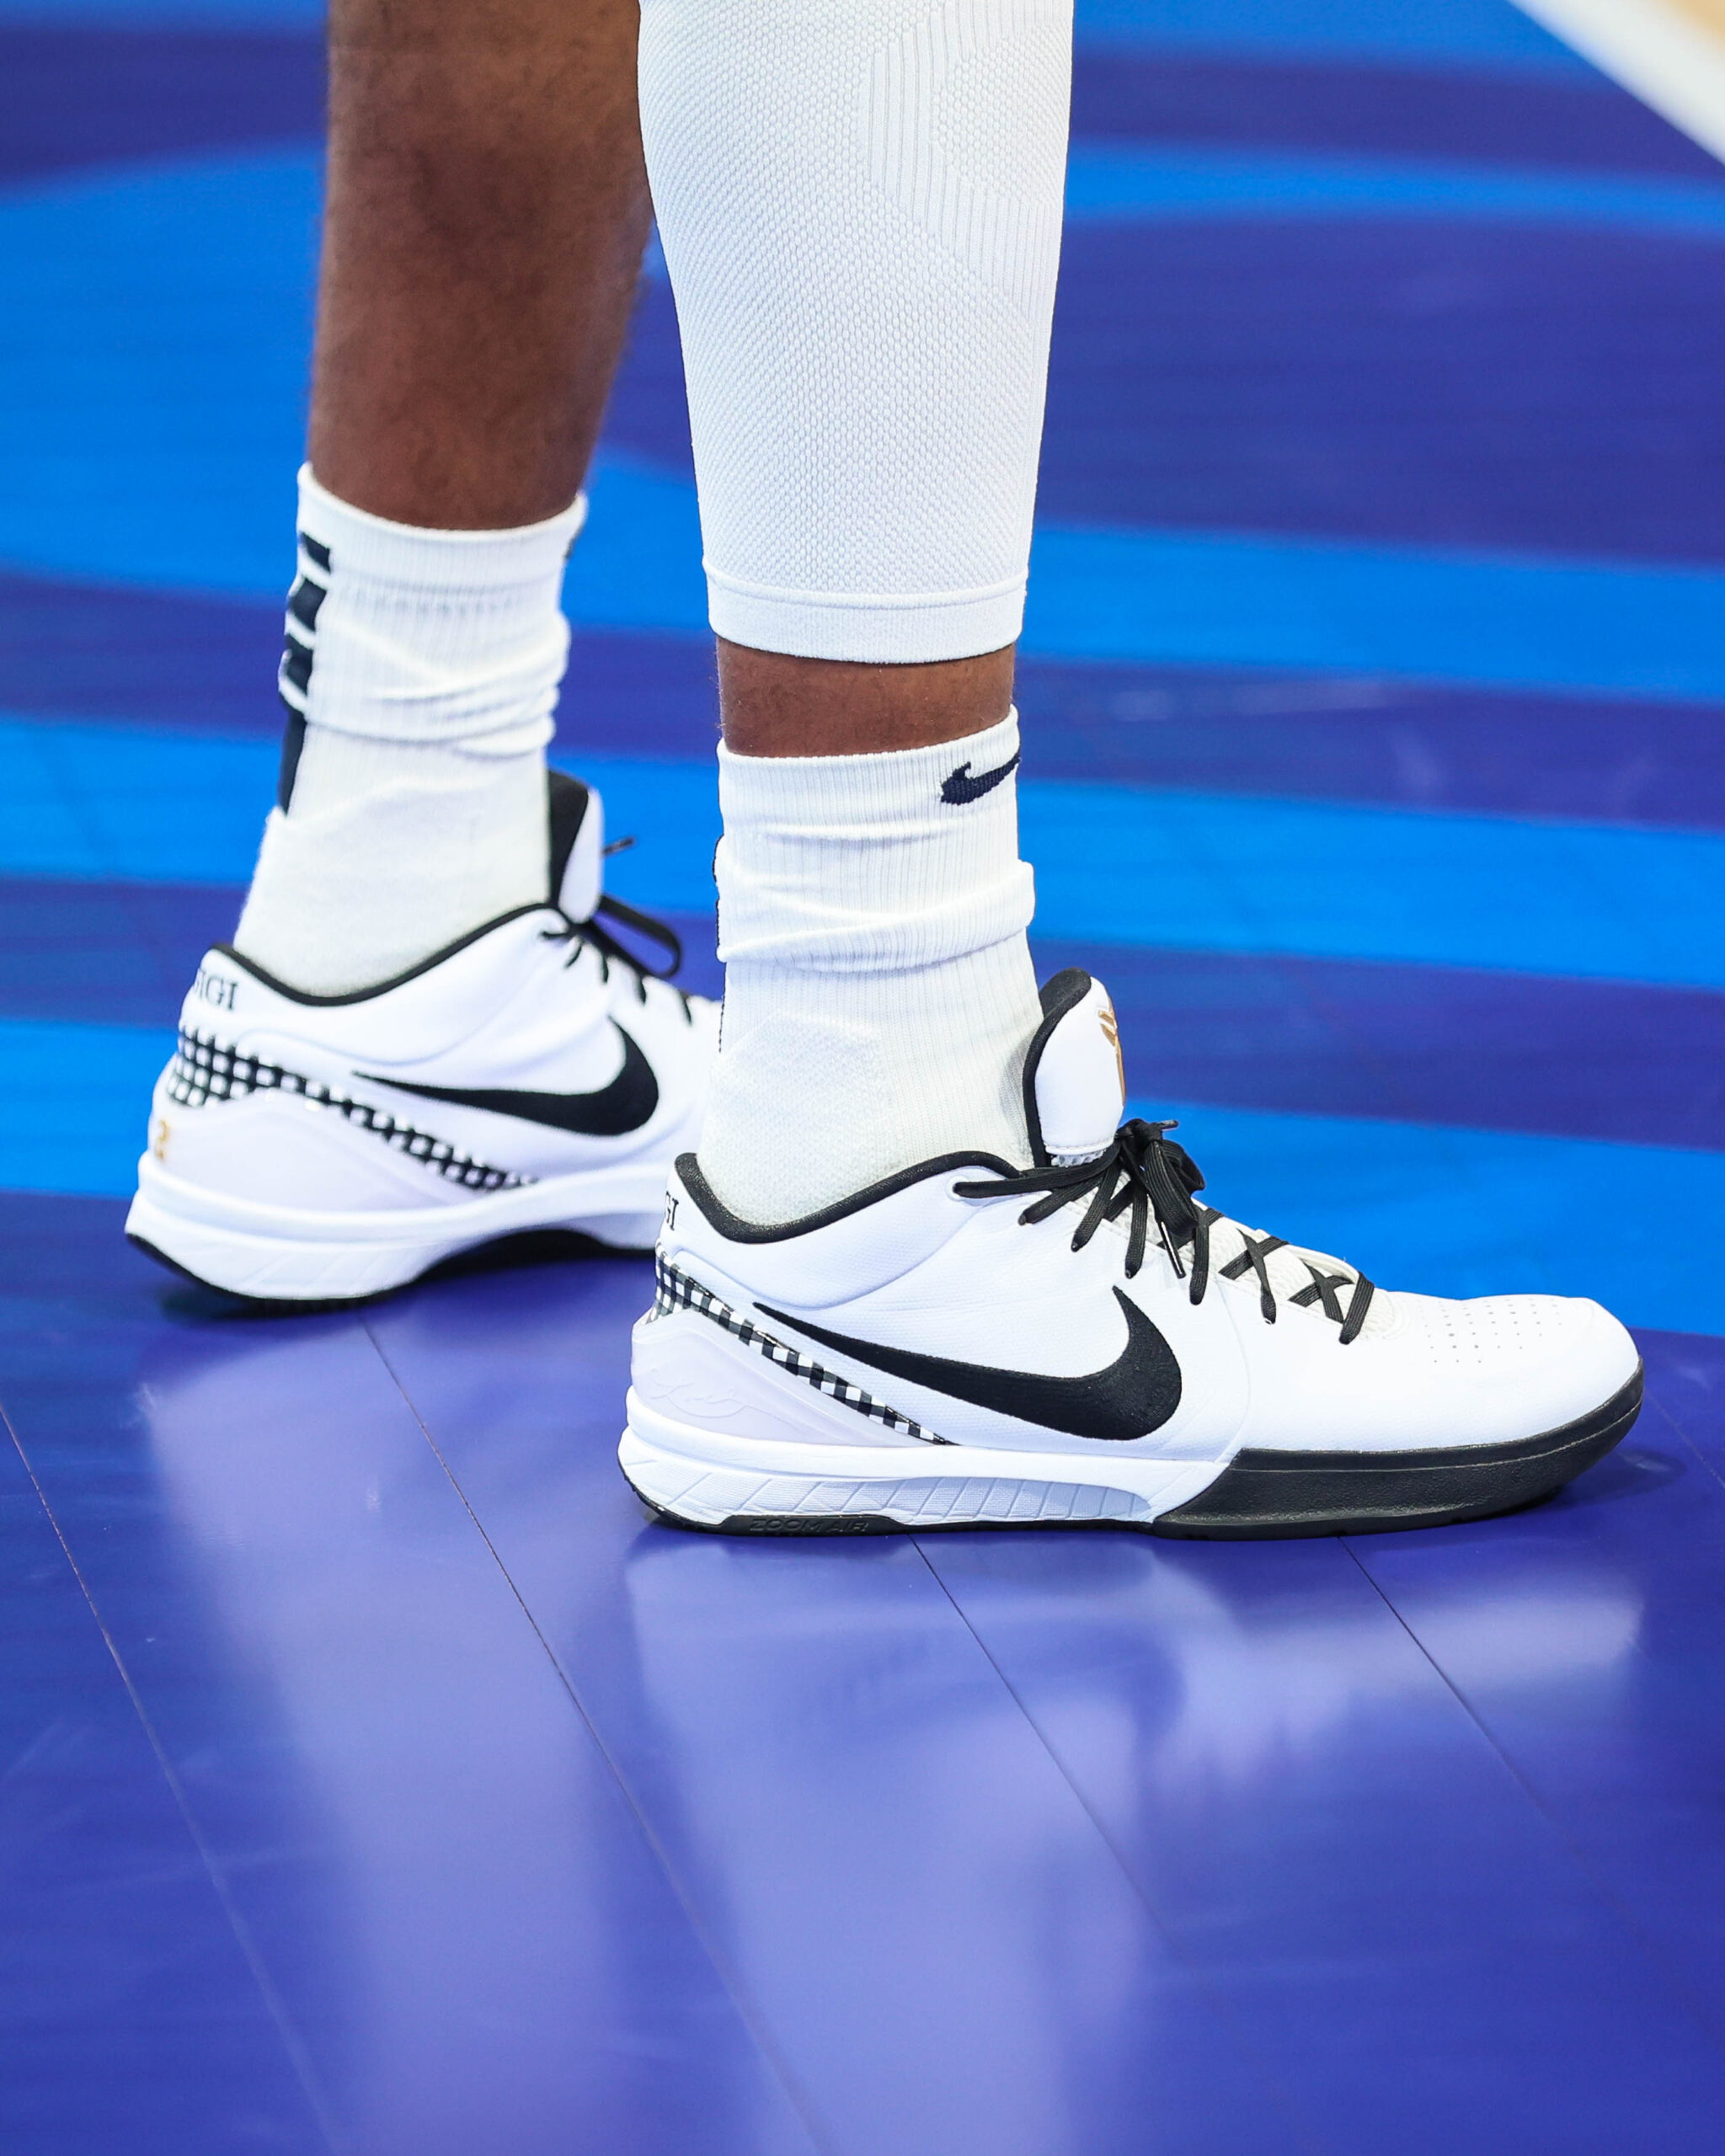 Cam Johnson World Cup shoes: Kobe 4 Protro "Mambacita"